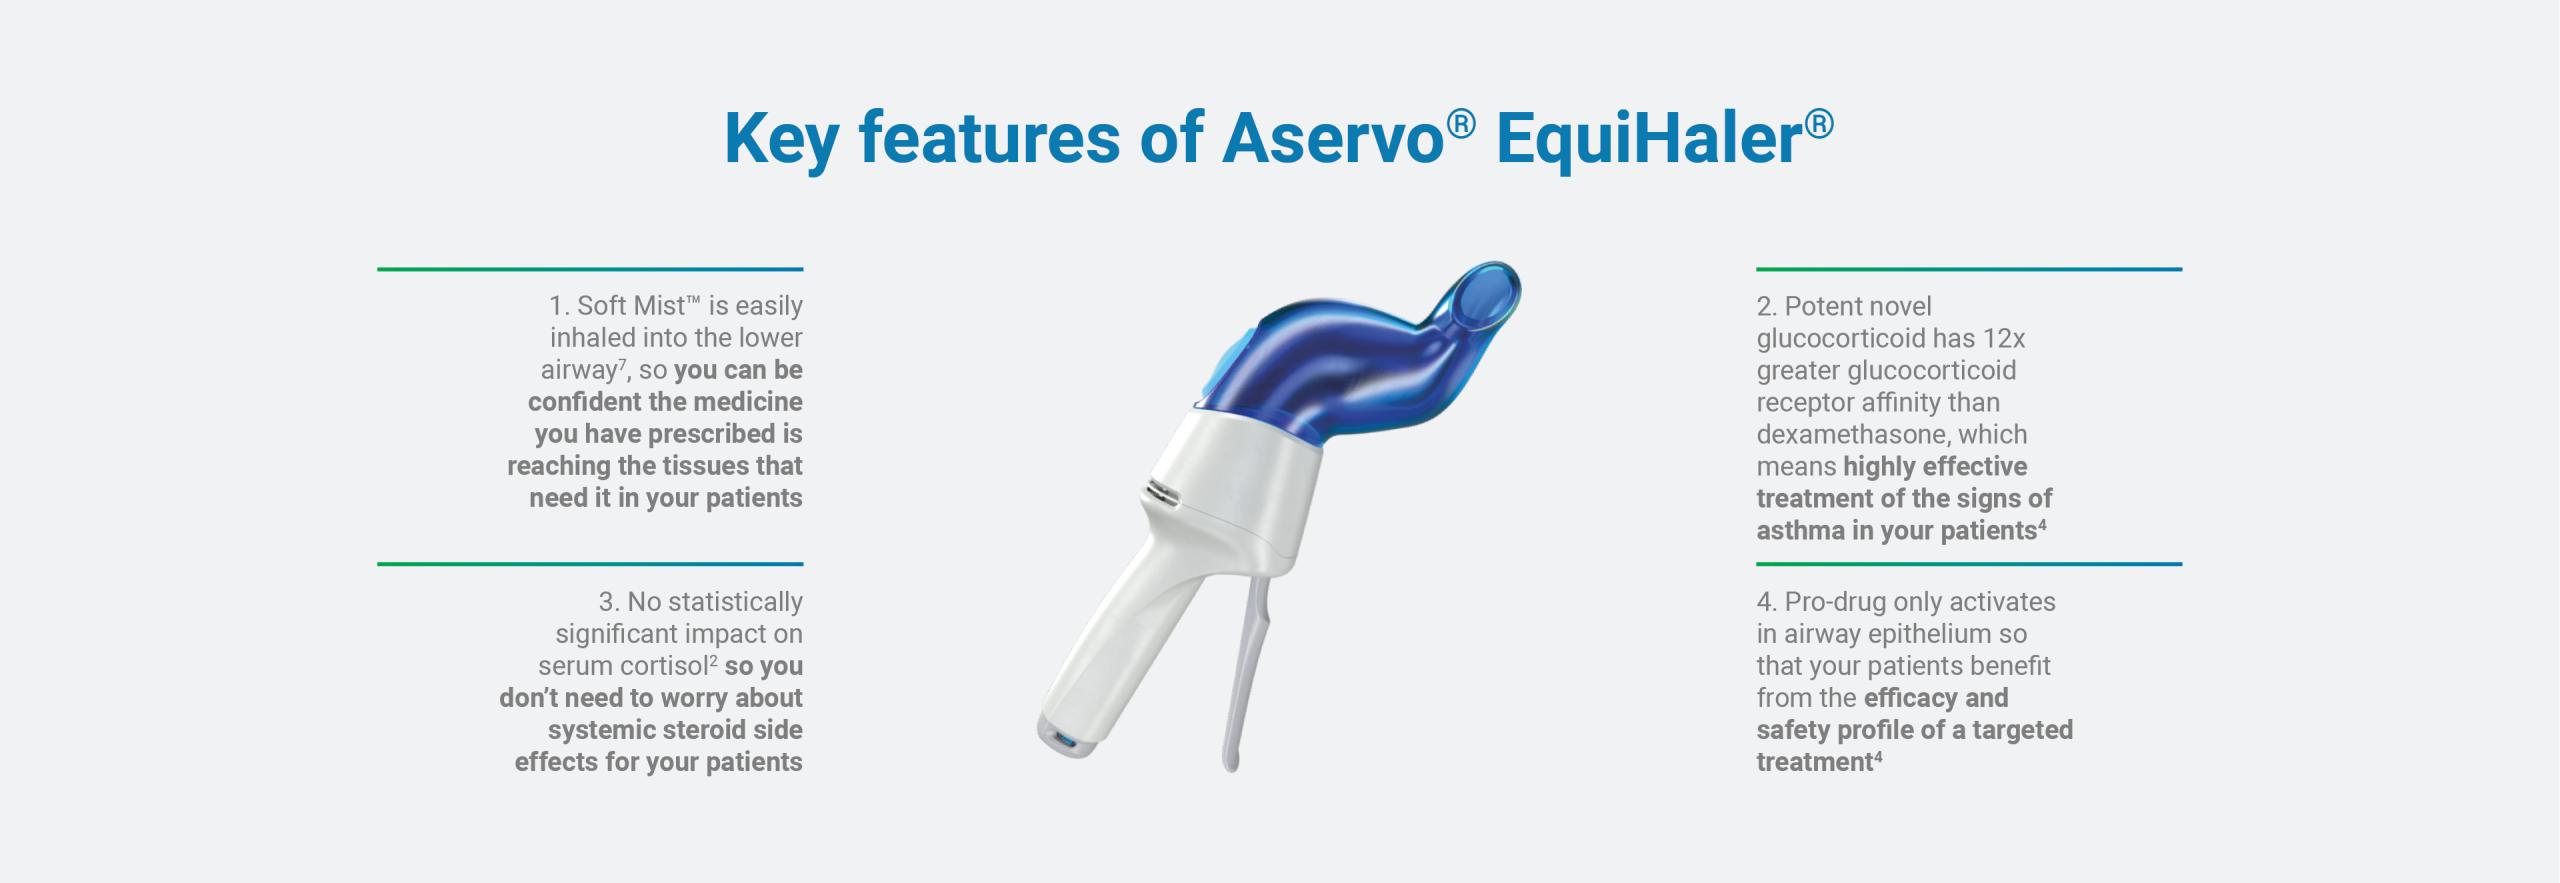 Key features of Aservo Equihaler